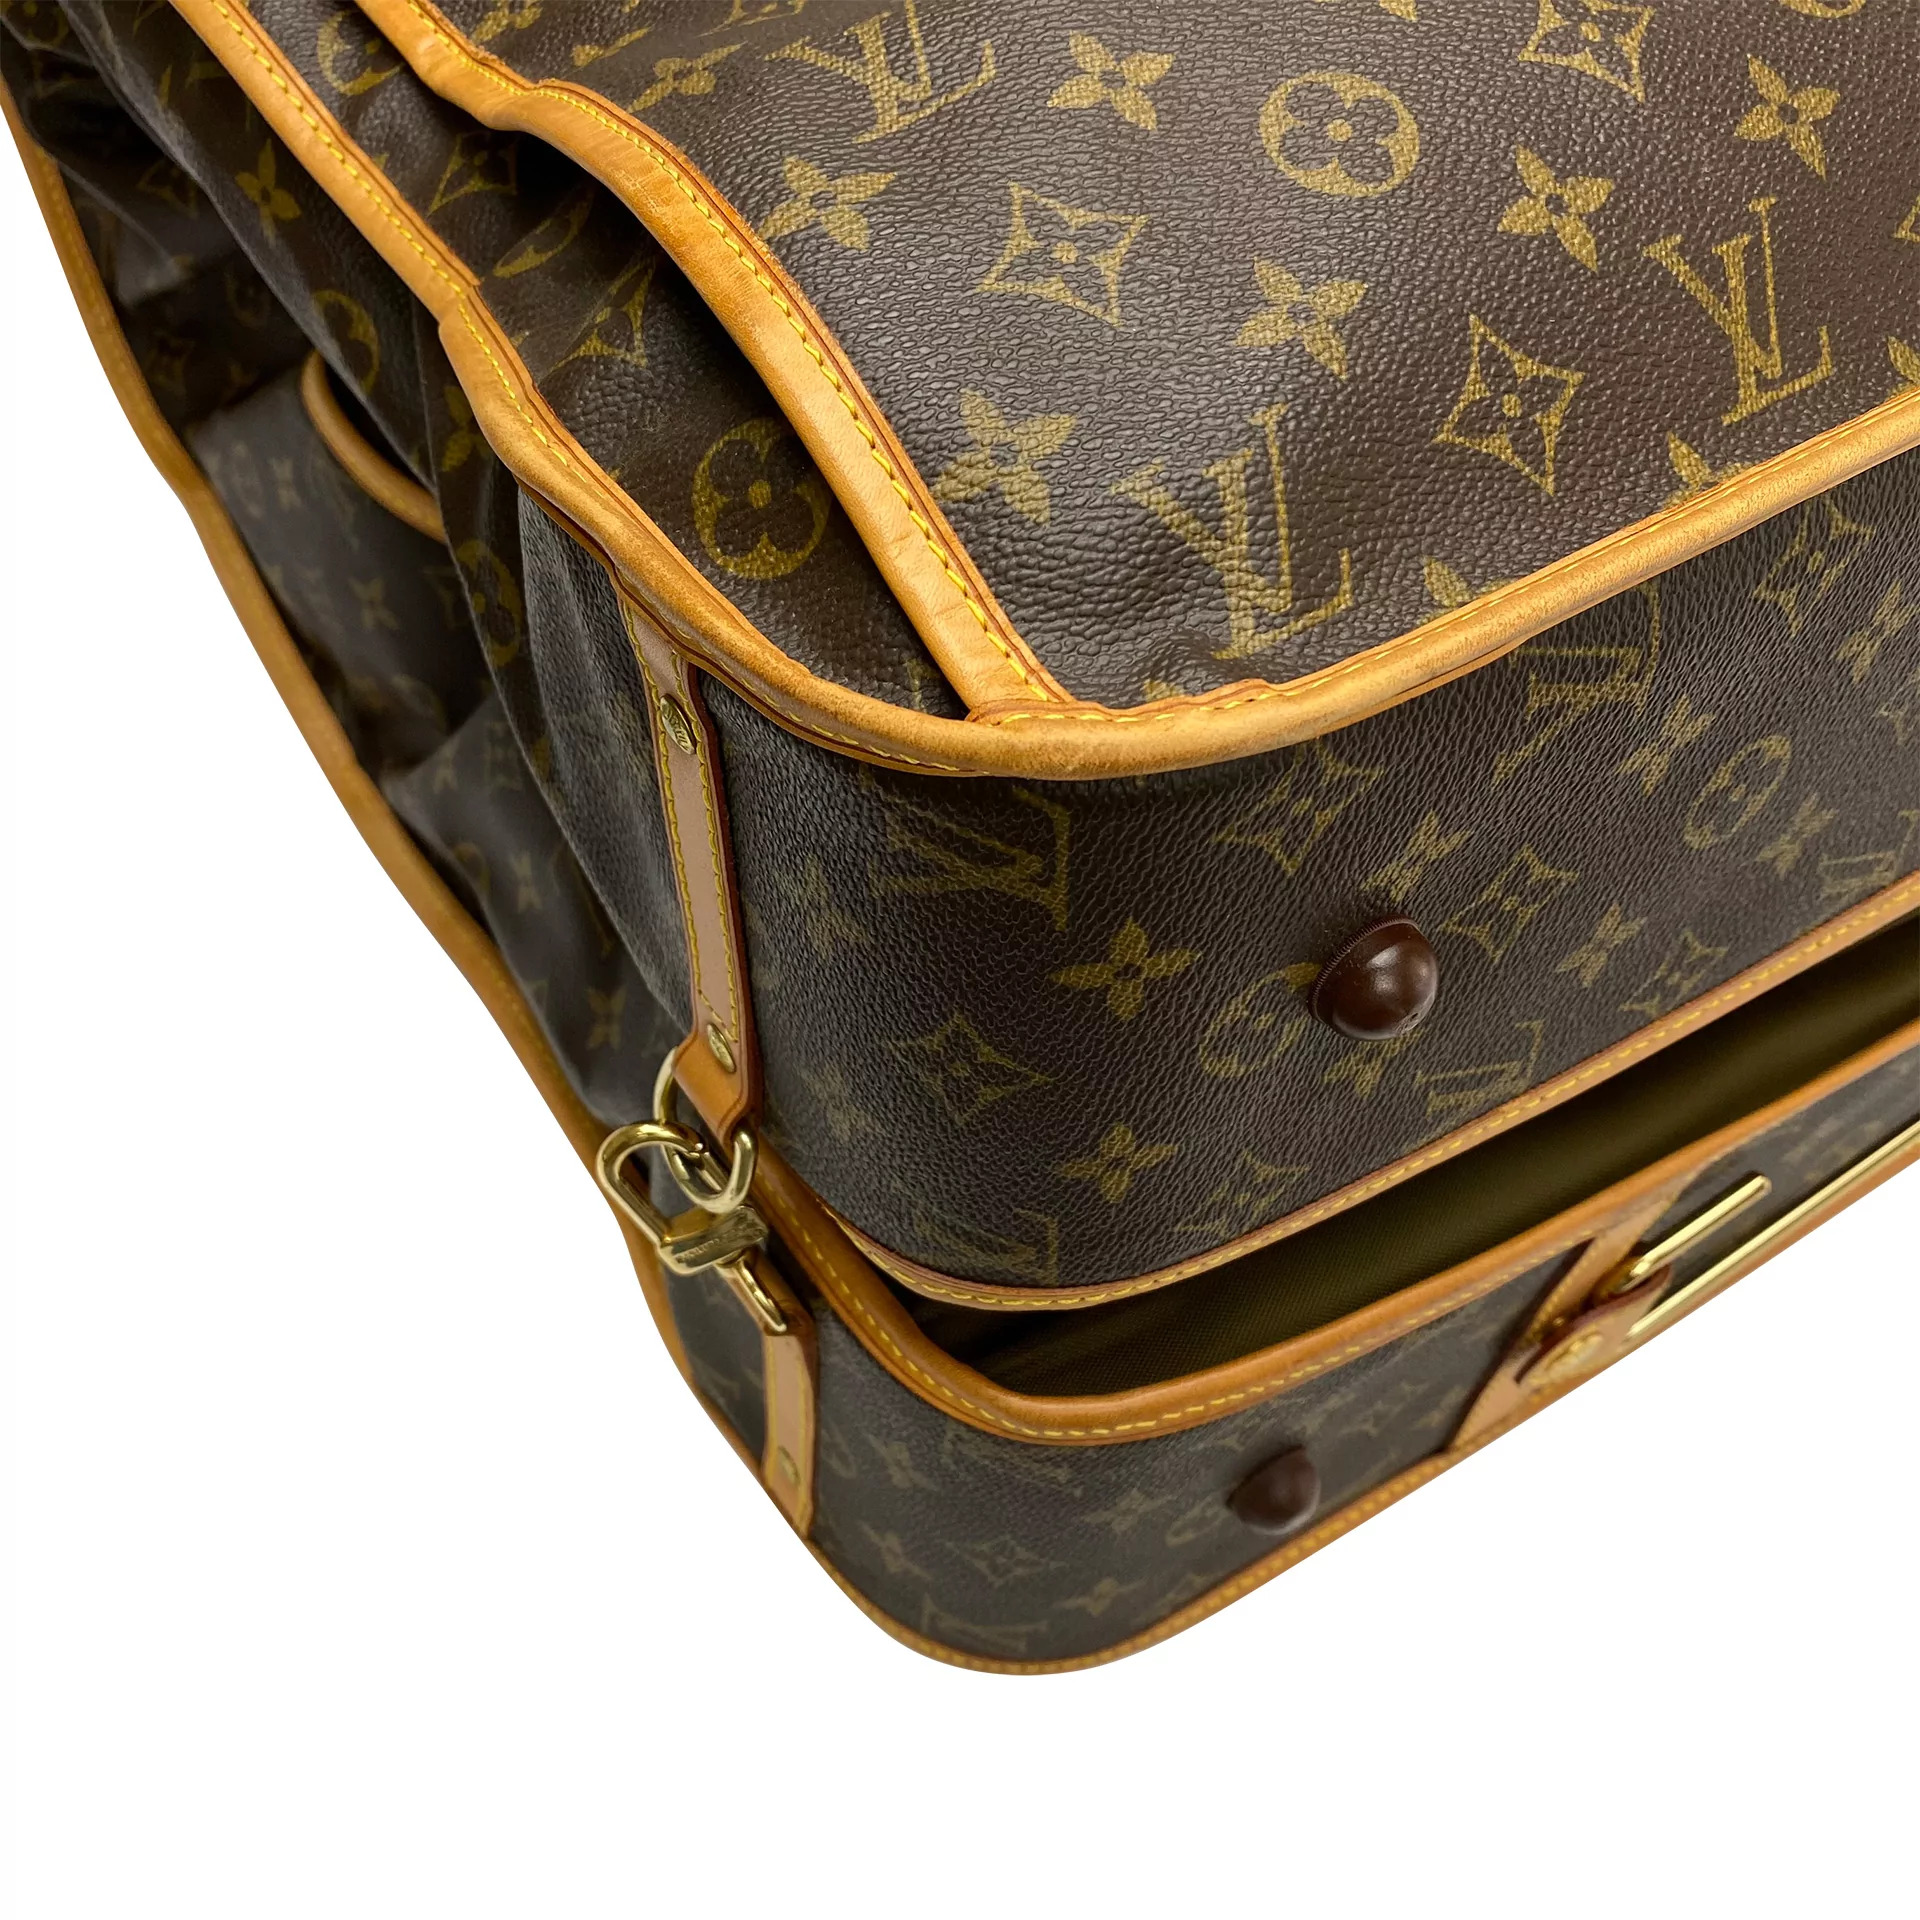 Bolsa para terno Louis Vuitton - Com etiqueta e cabides